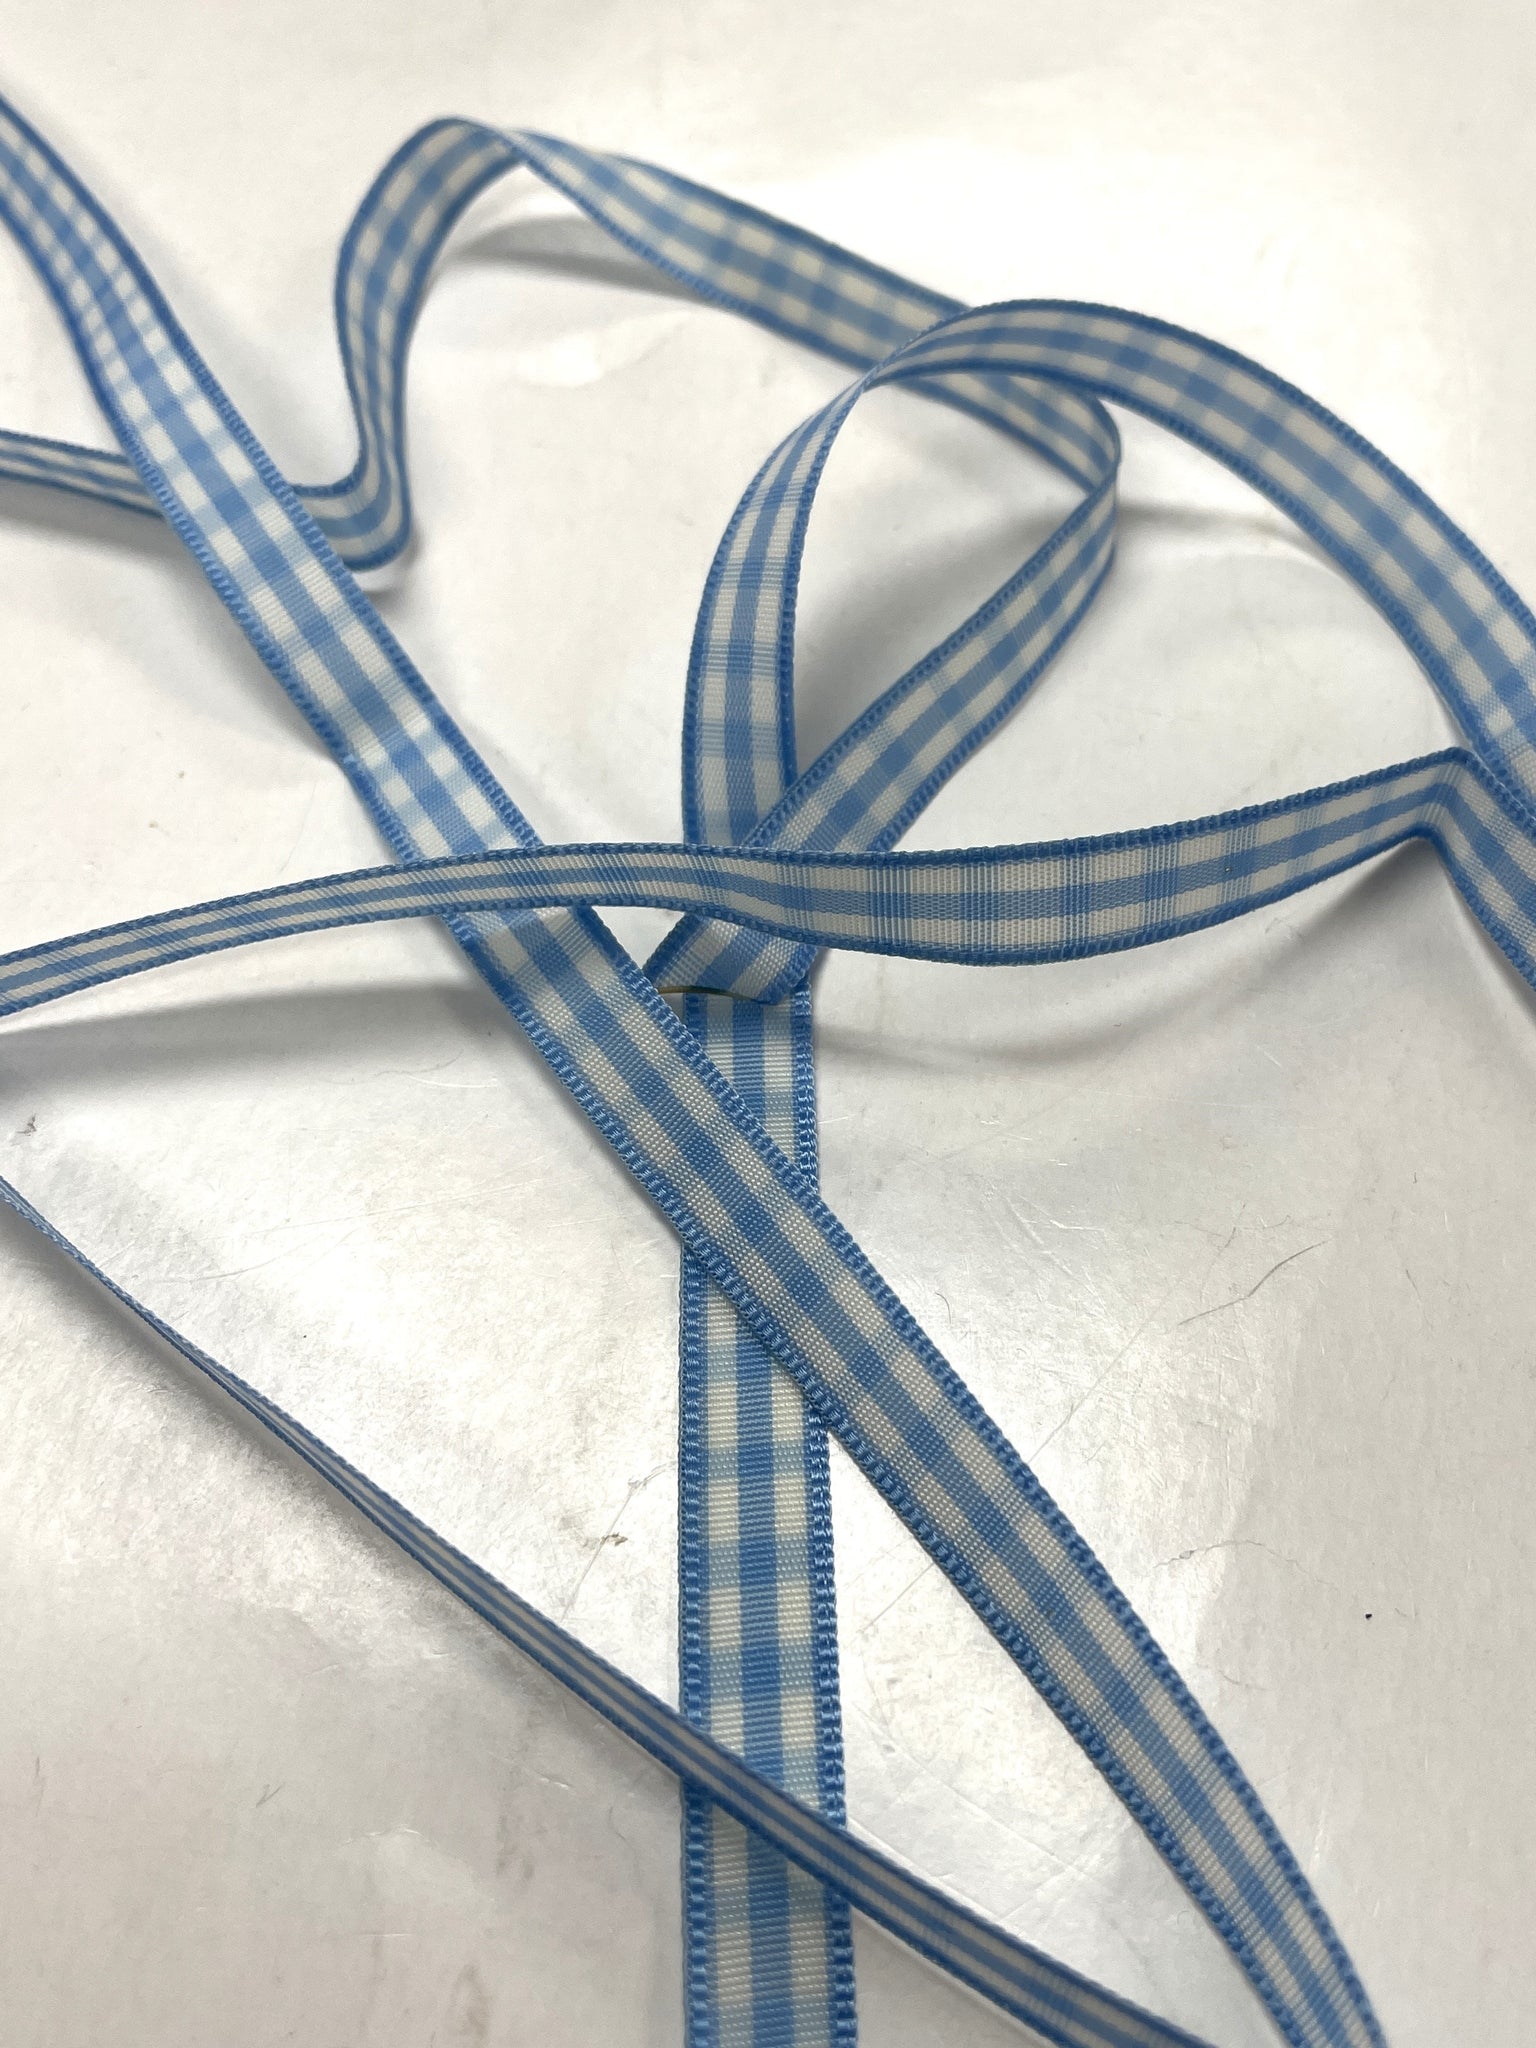 2 1/2 YD Nylon Yarn-Dyed Gingham Ribbon - Blue and White